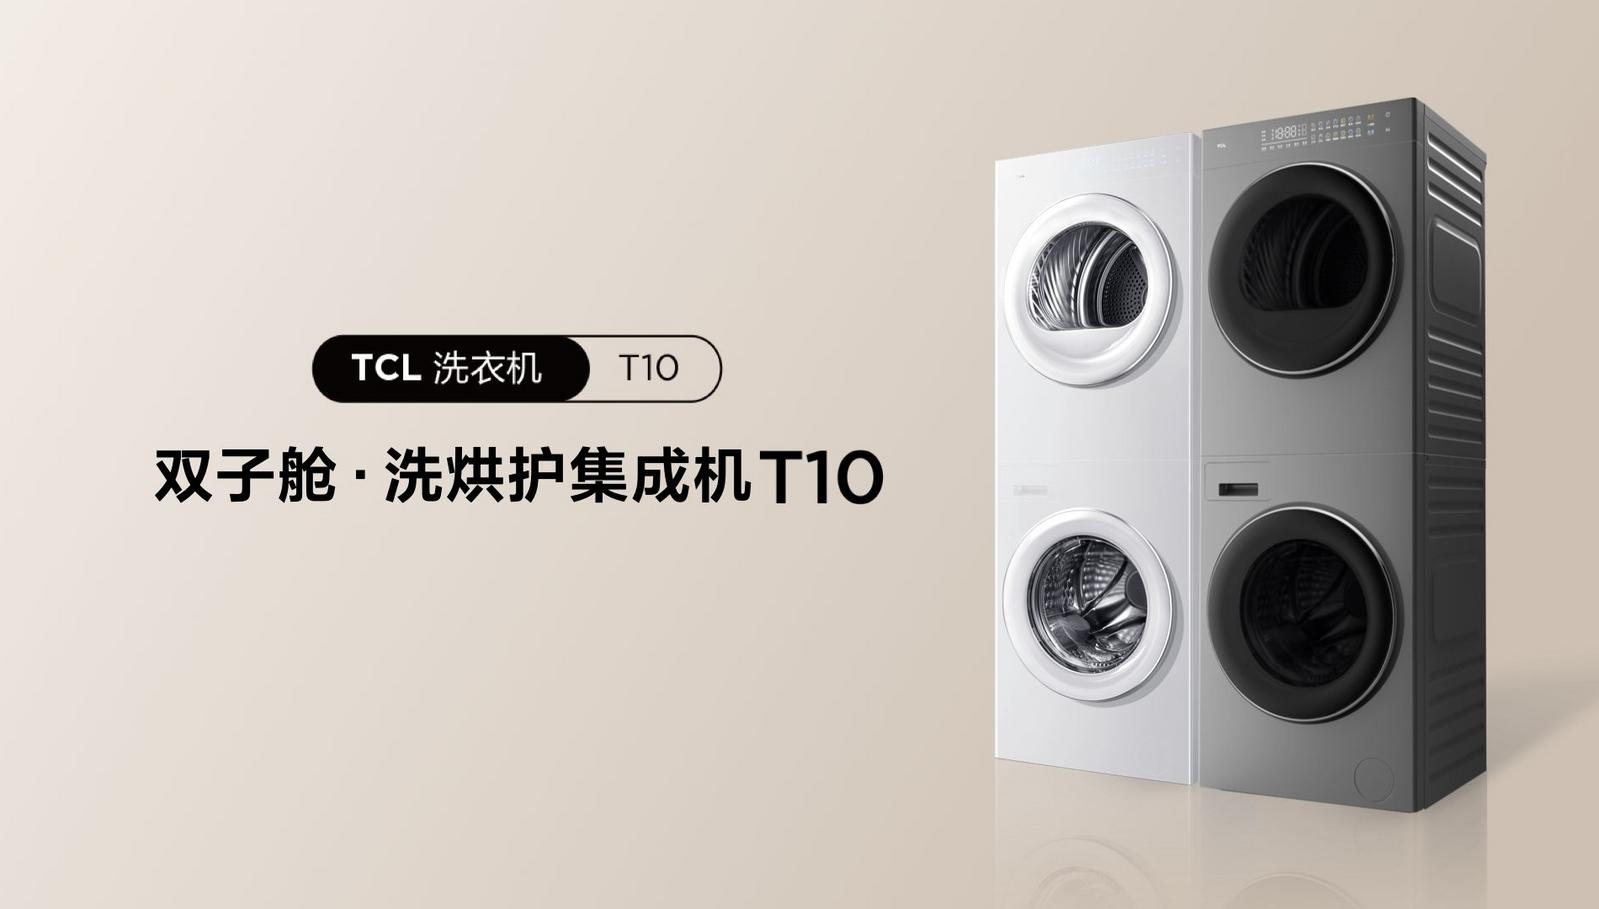 TCL洗衣机秋季新品发布会举行,双子舱洗烘护集成机T10全球首发